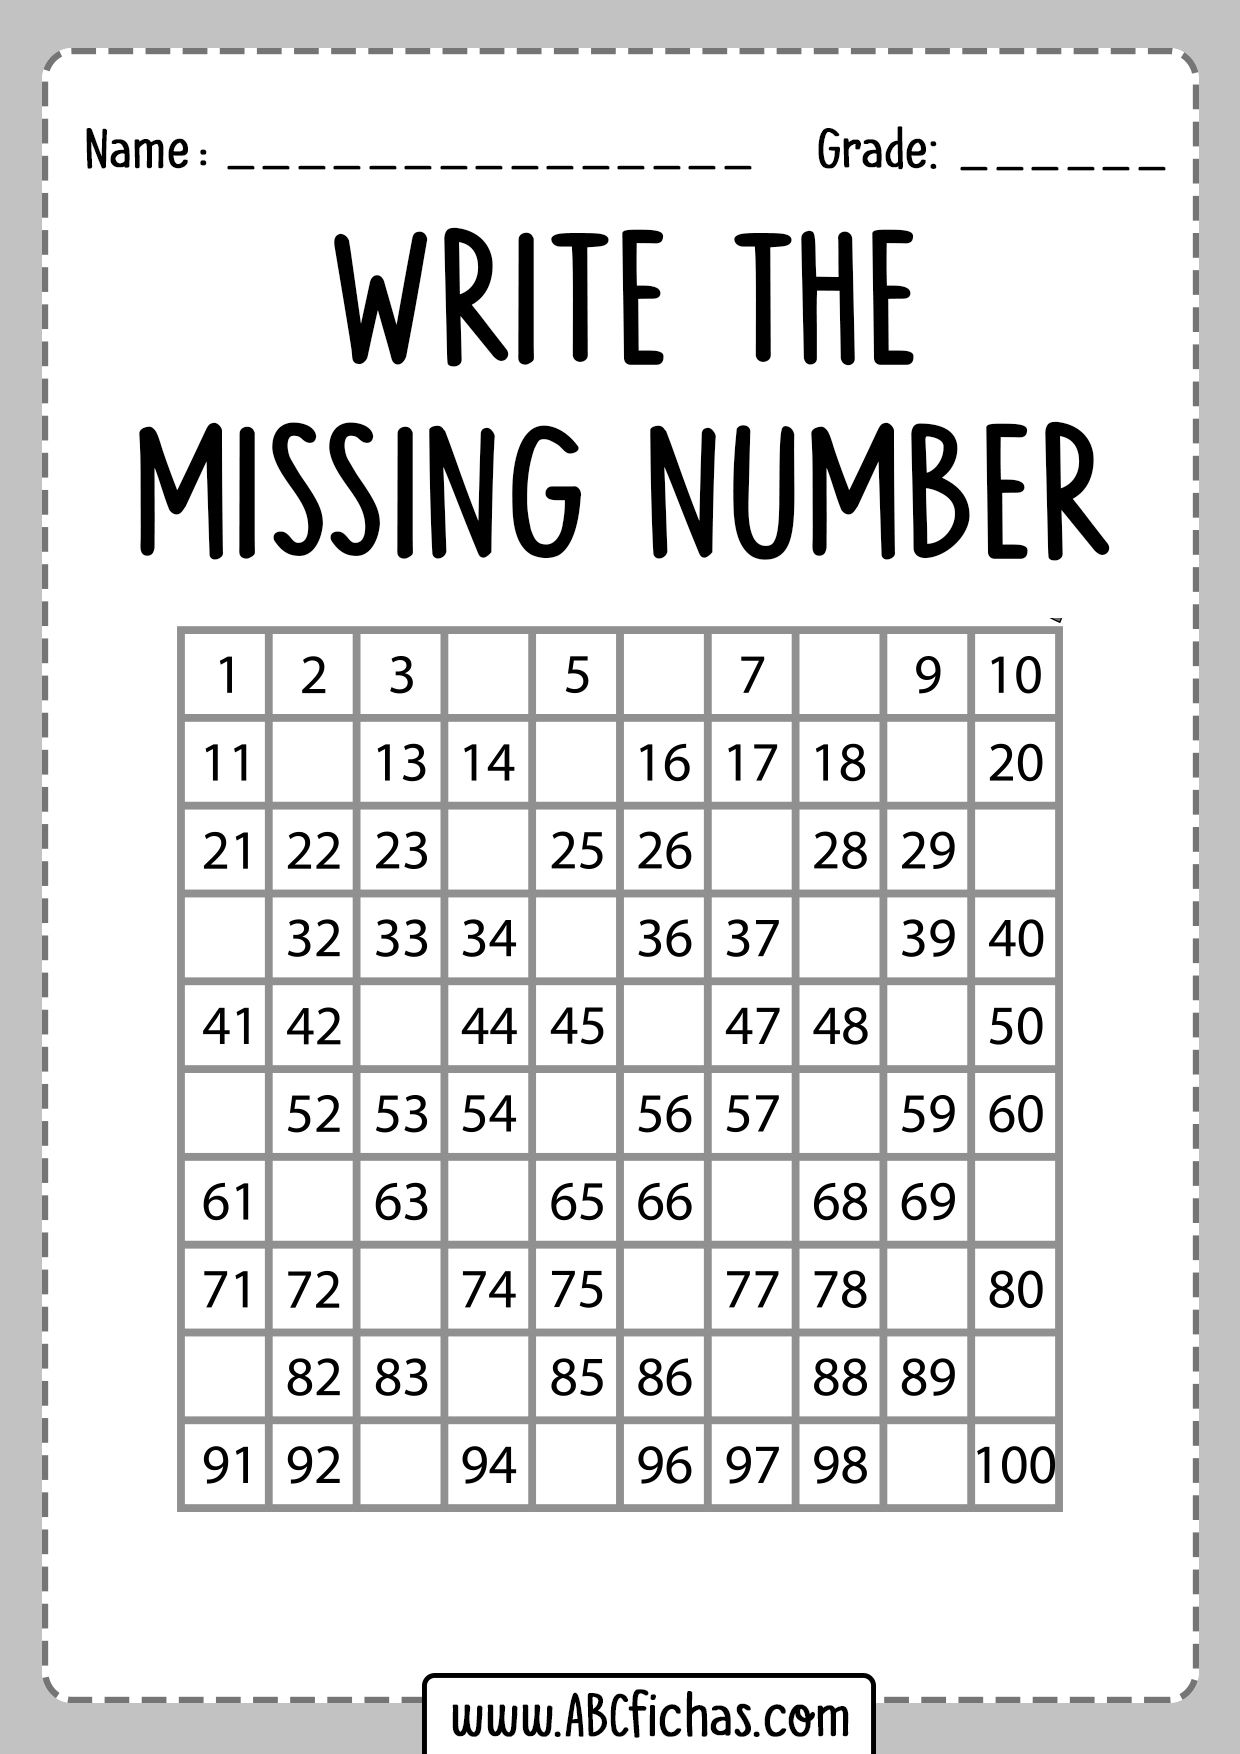 Missing number activity for kids